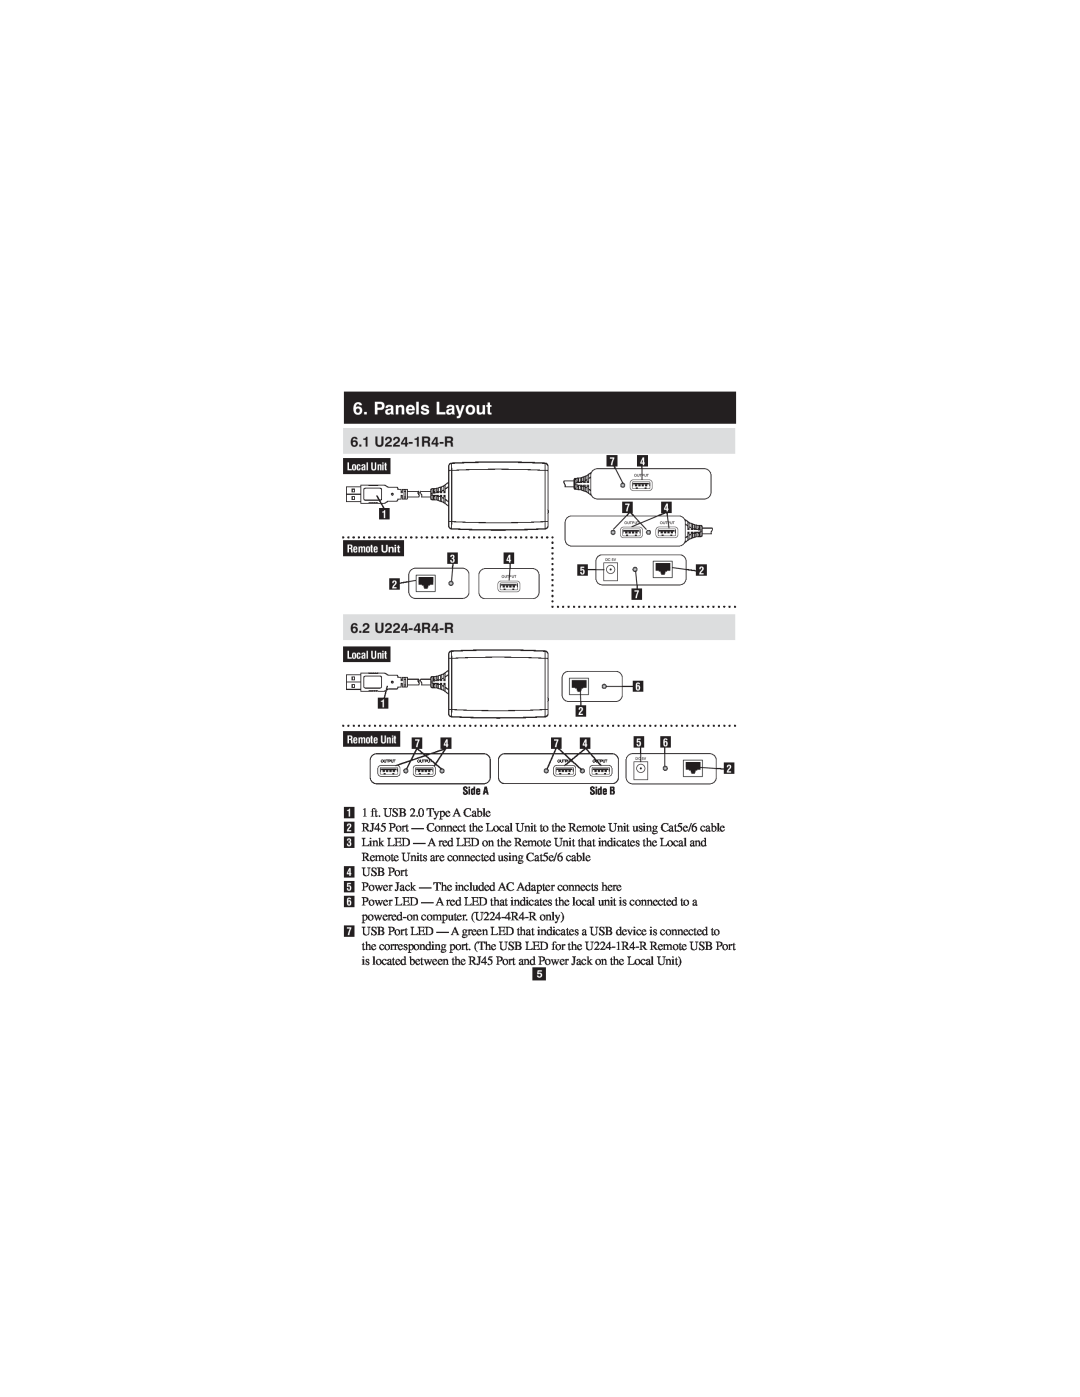 Tripp Lite owner manual Panels Layout, 6.1 U224-1R4-R, 6.2 U224-4R4-R 